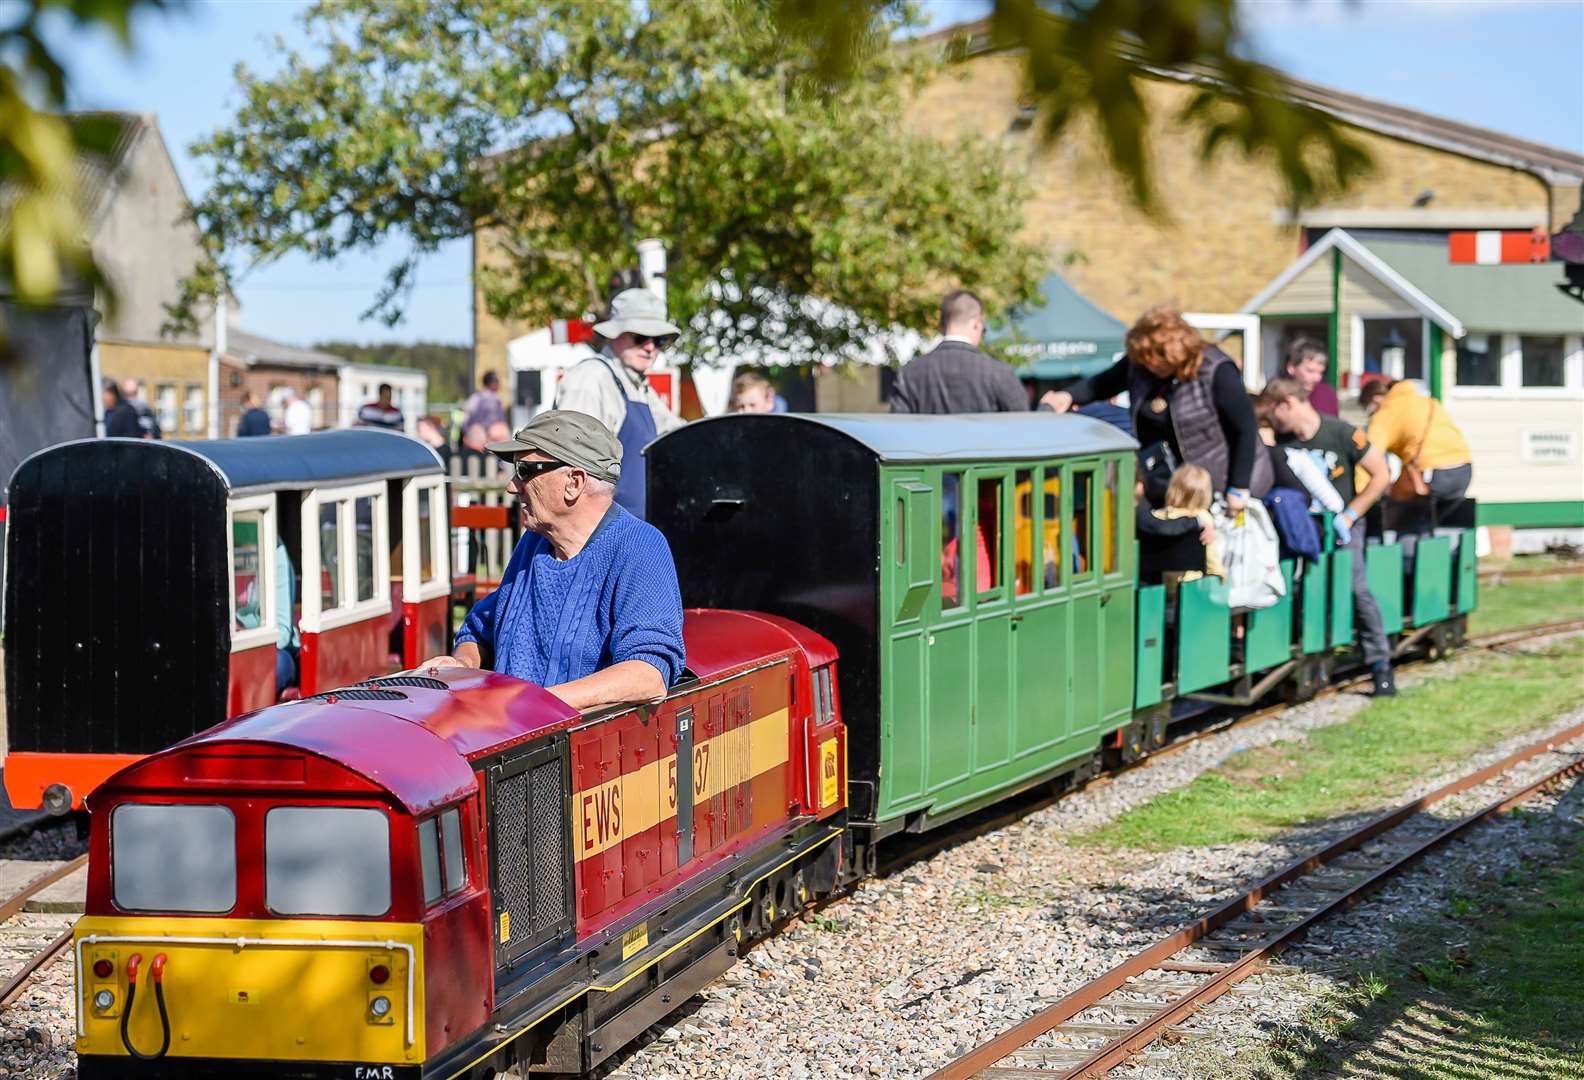 Brogdale Farm is home to Faversham Miniature railway